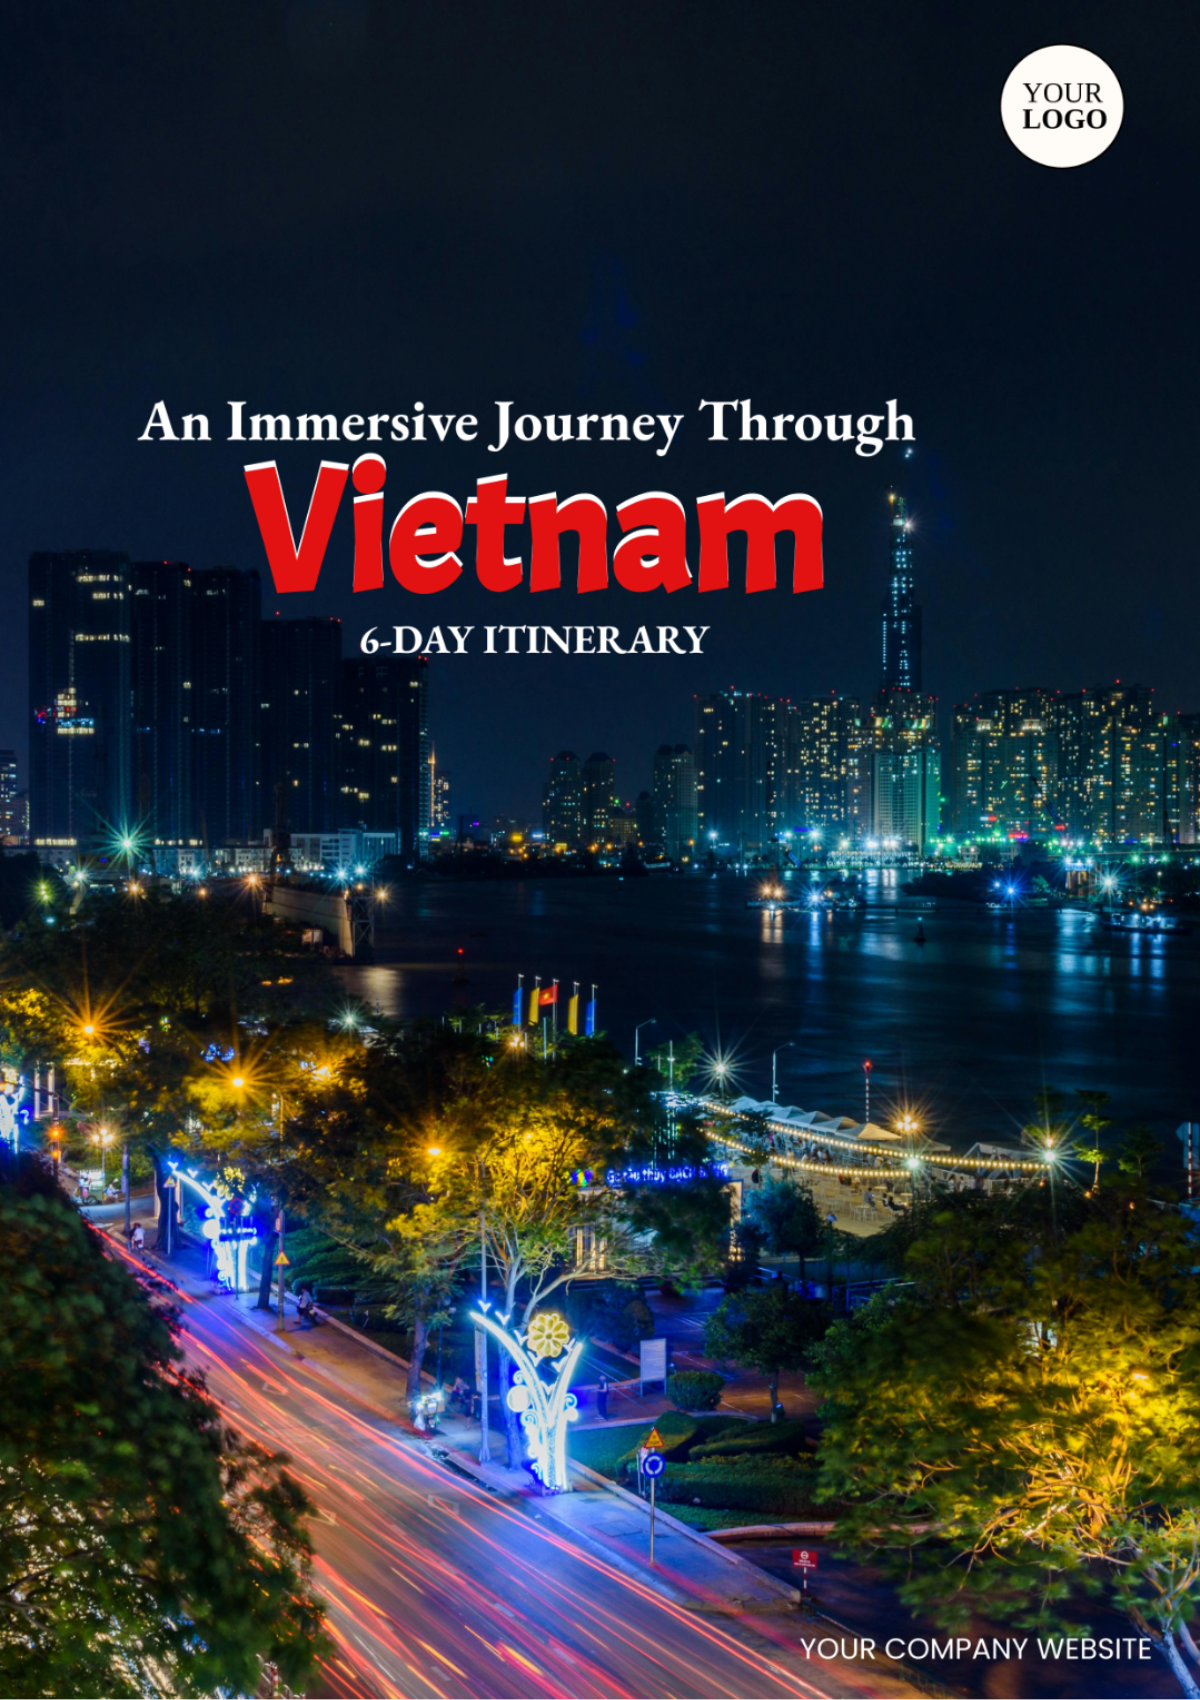 6 Day Vietnam Itinerary Template